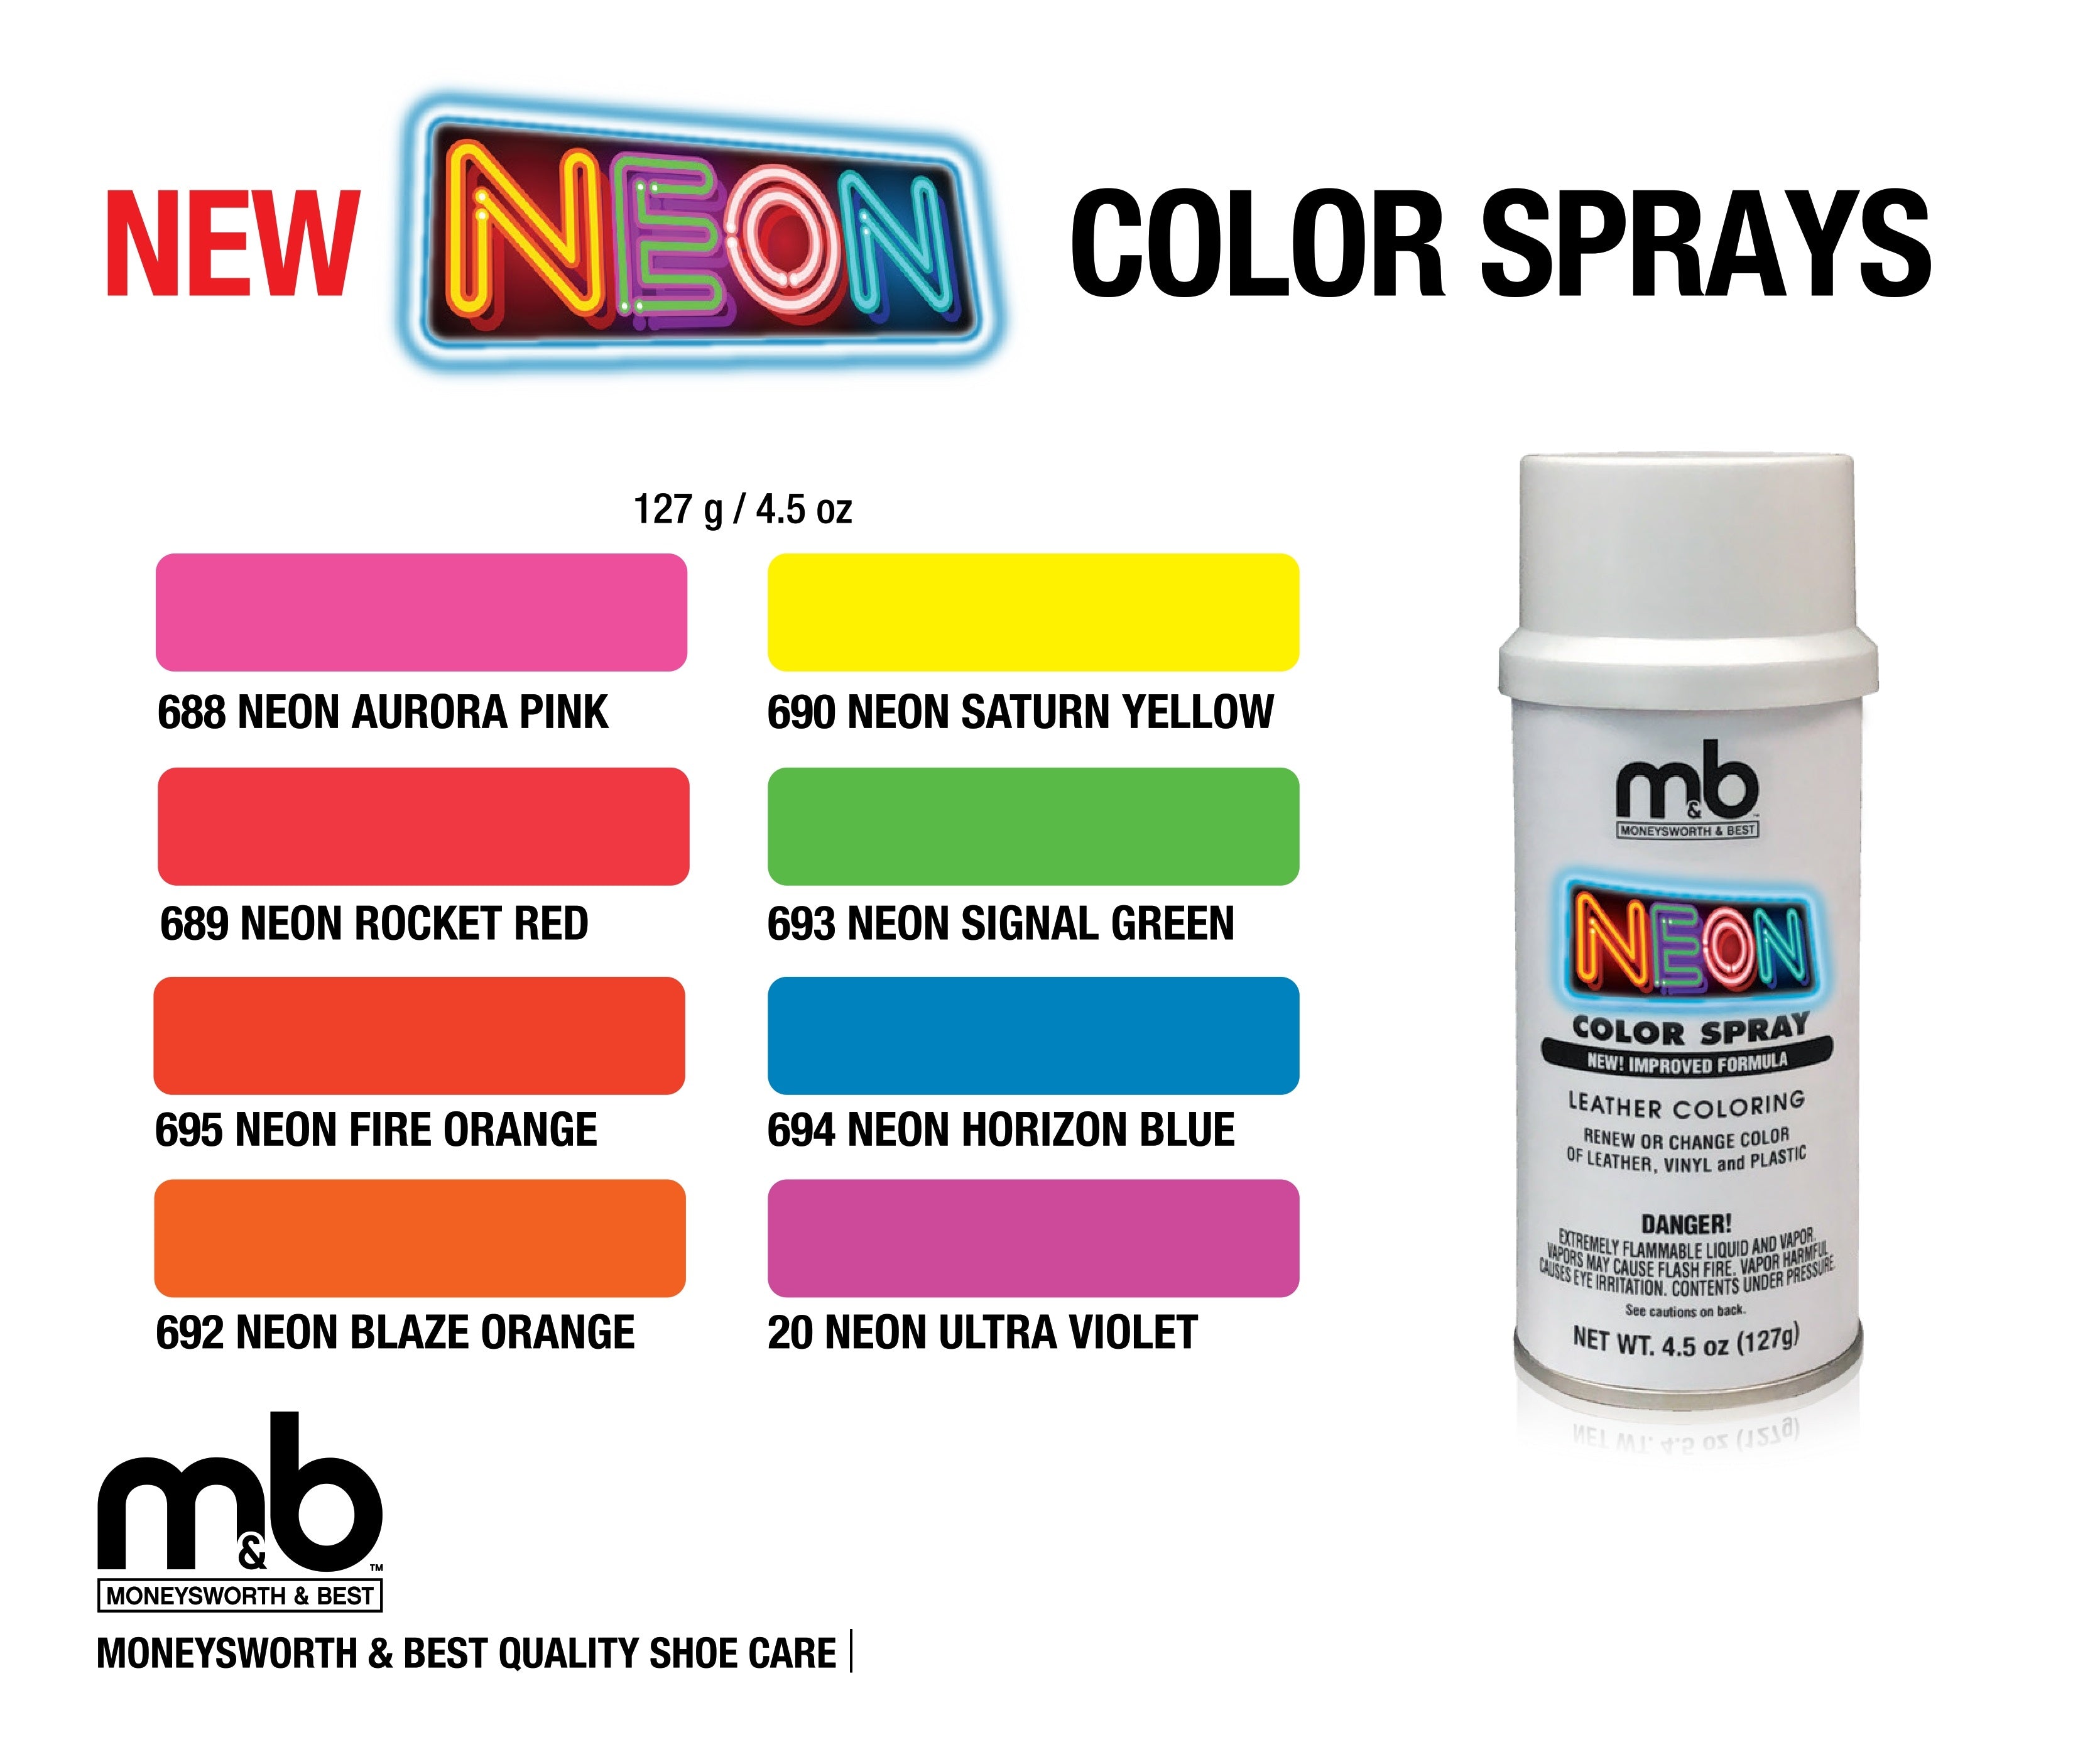 Brillo Leather Color Spray Dye Chart